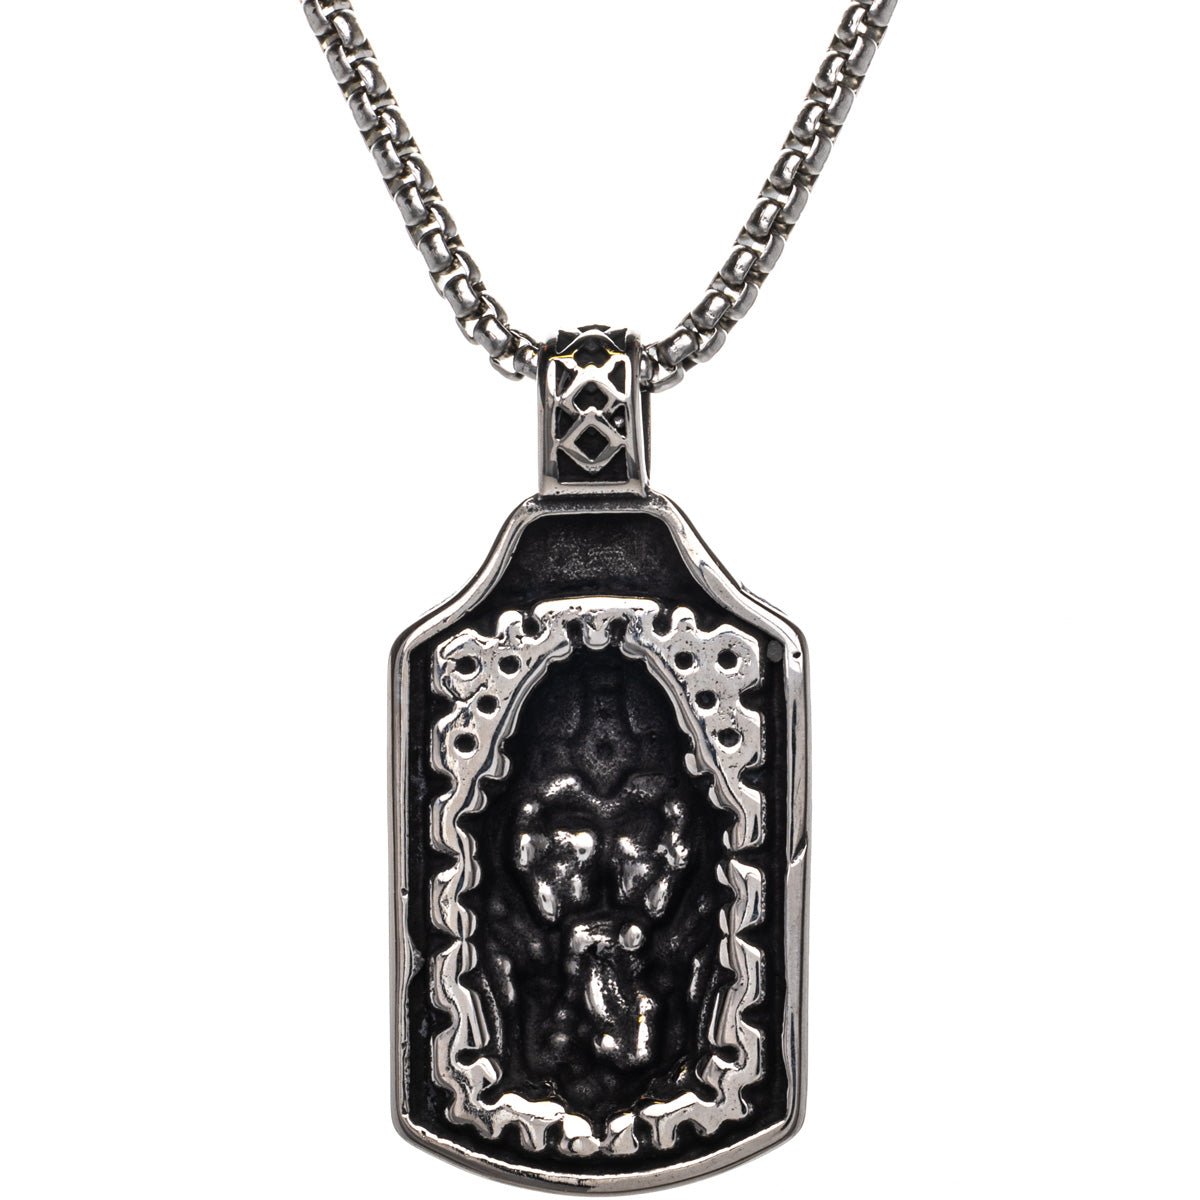 Odin tile pendant necklace (Steel 316L)